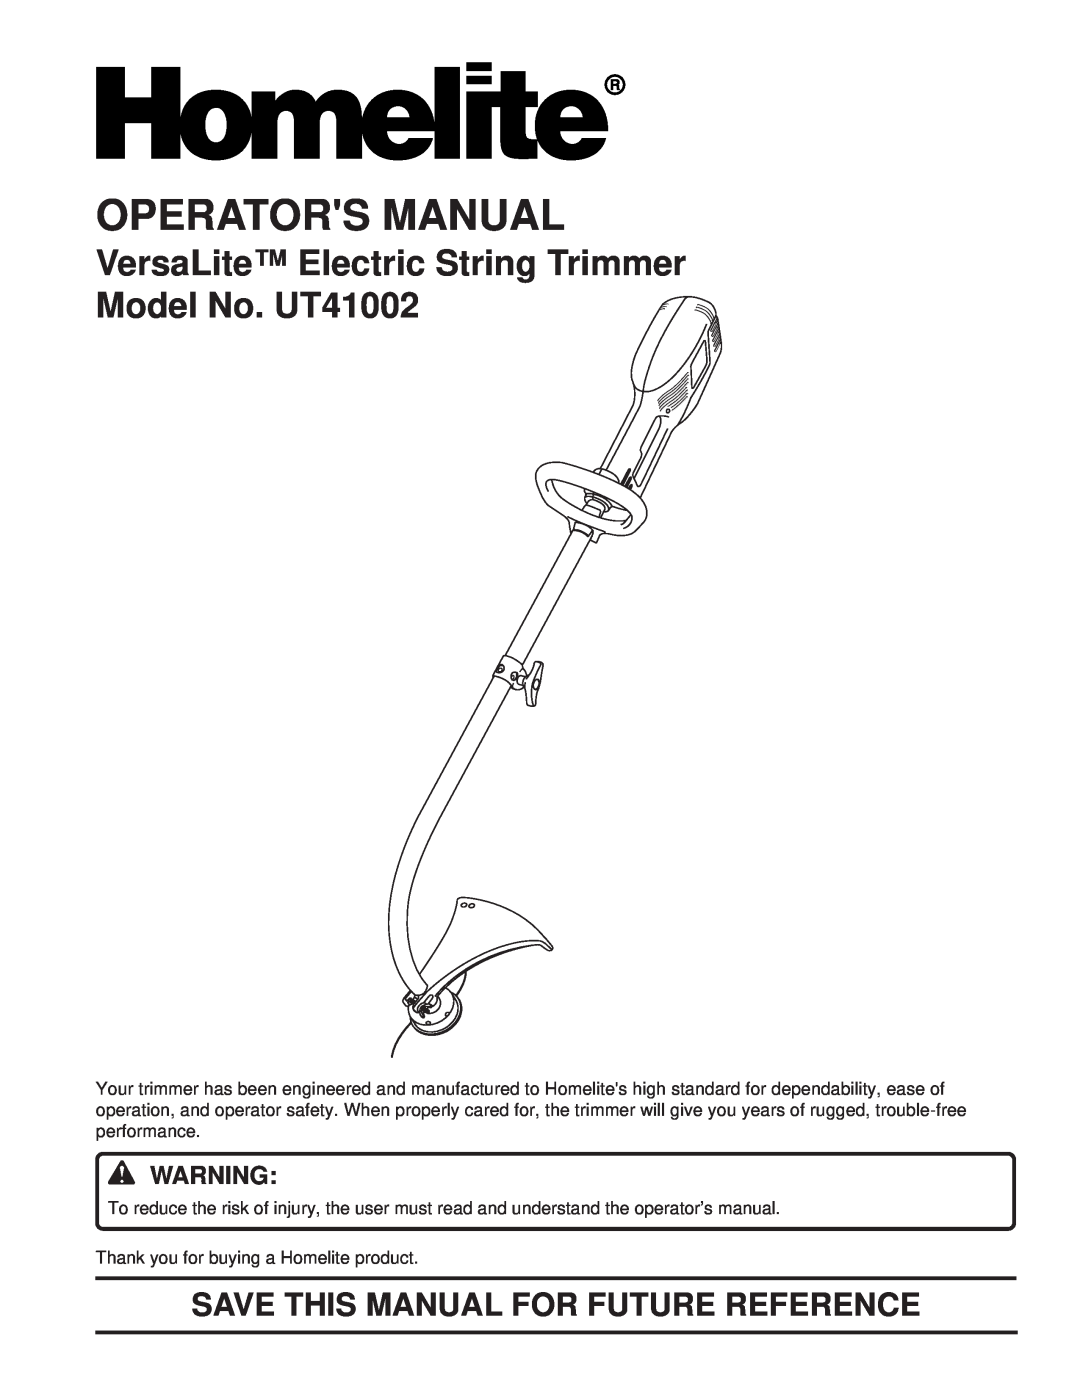 Homelite manual Operators Manual, VersaLite Electric String Trimmer Model No. UT41002 